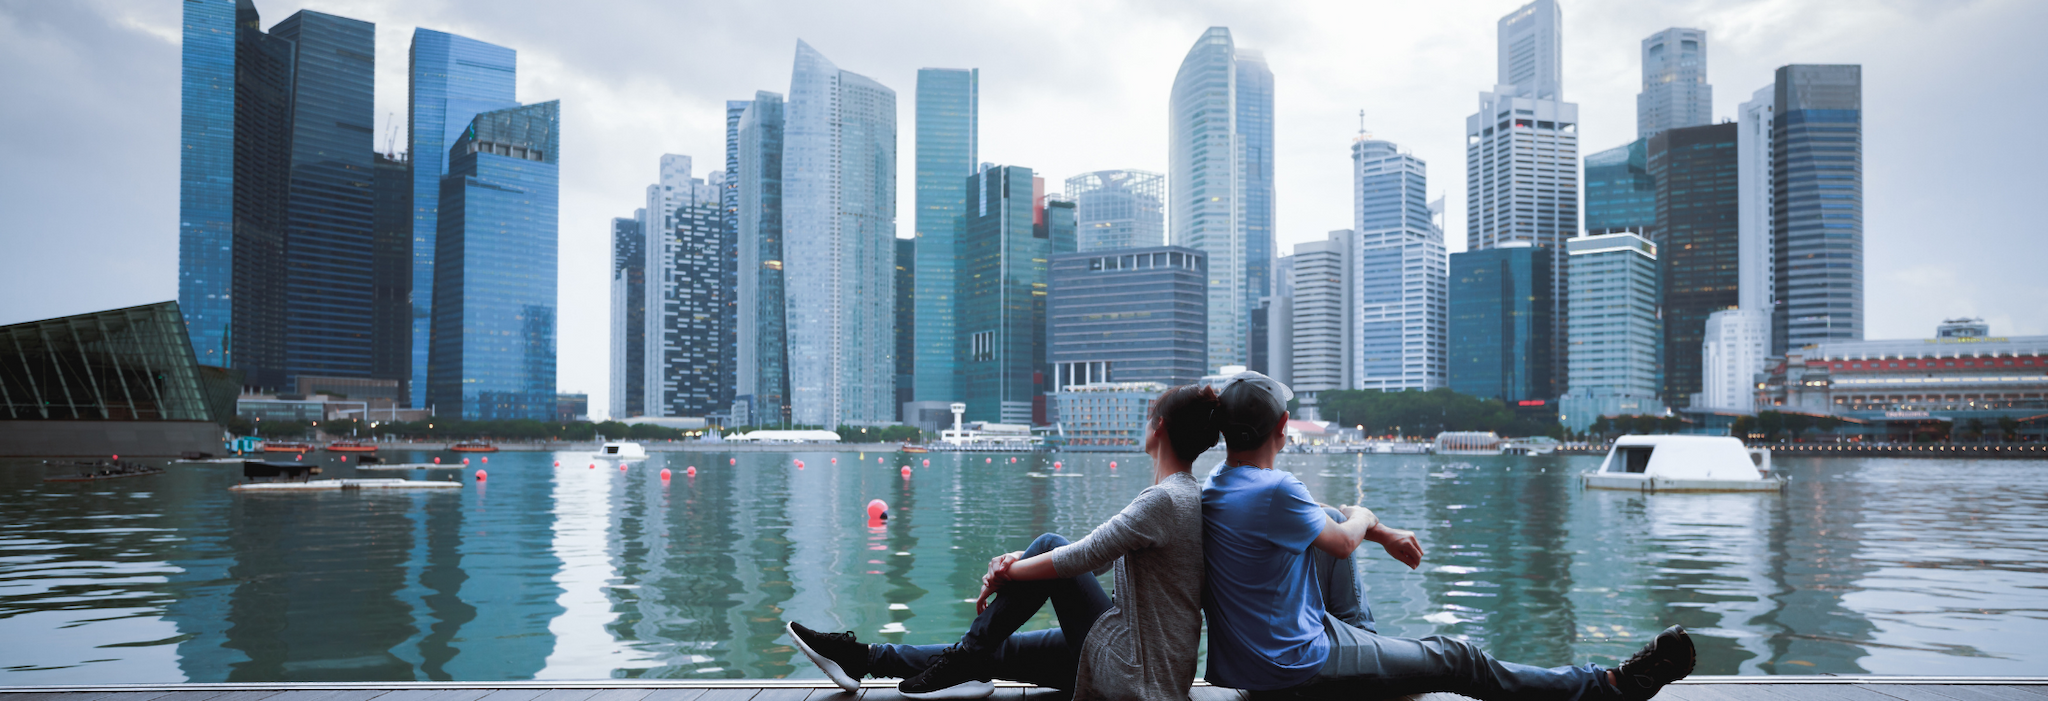 Singapore guide for honeymooners